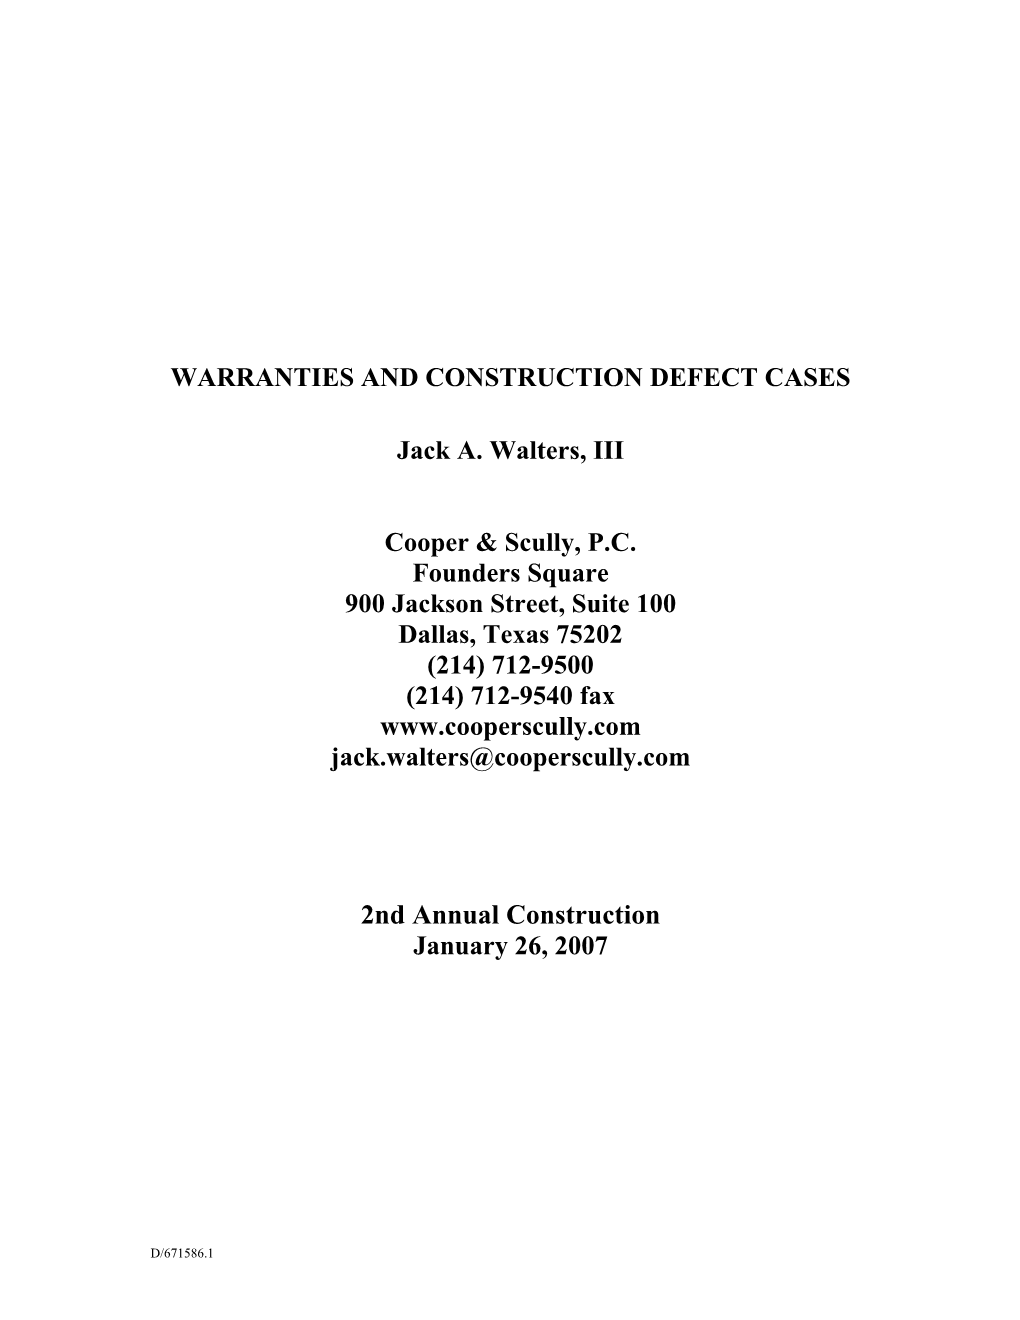 Warranties and Construction Defect Cases